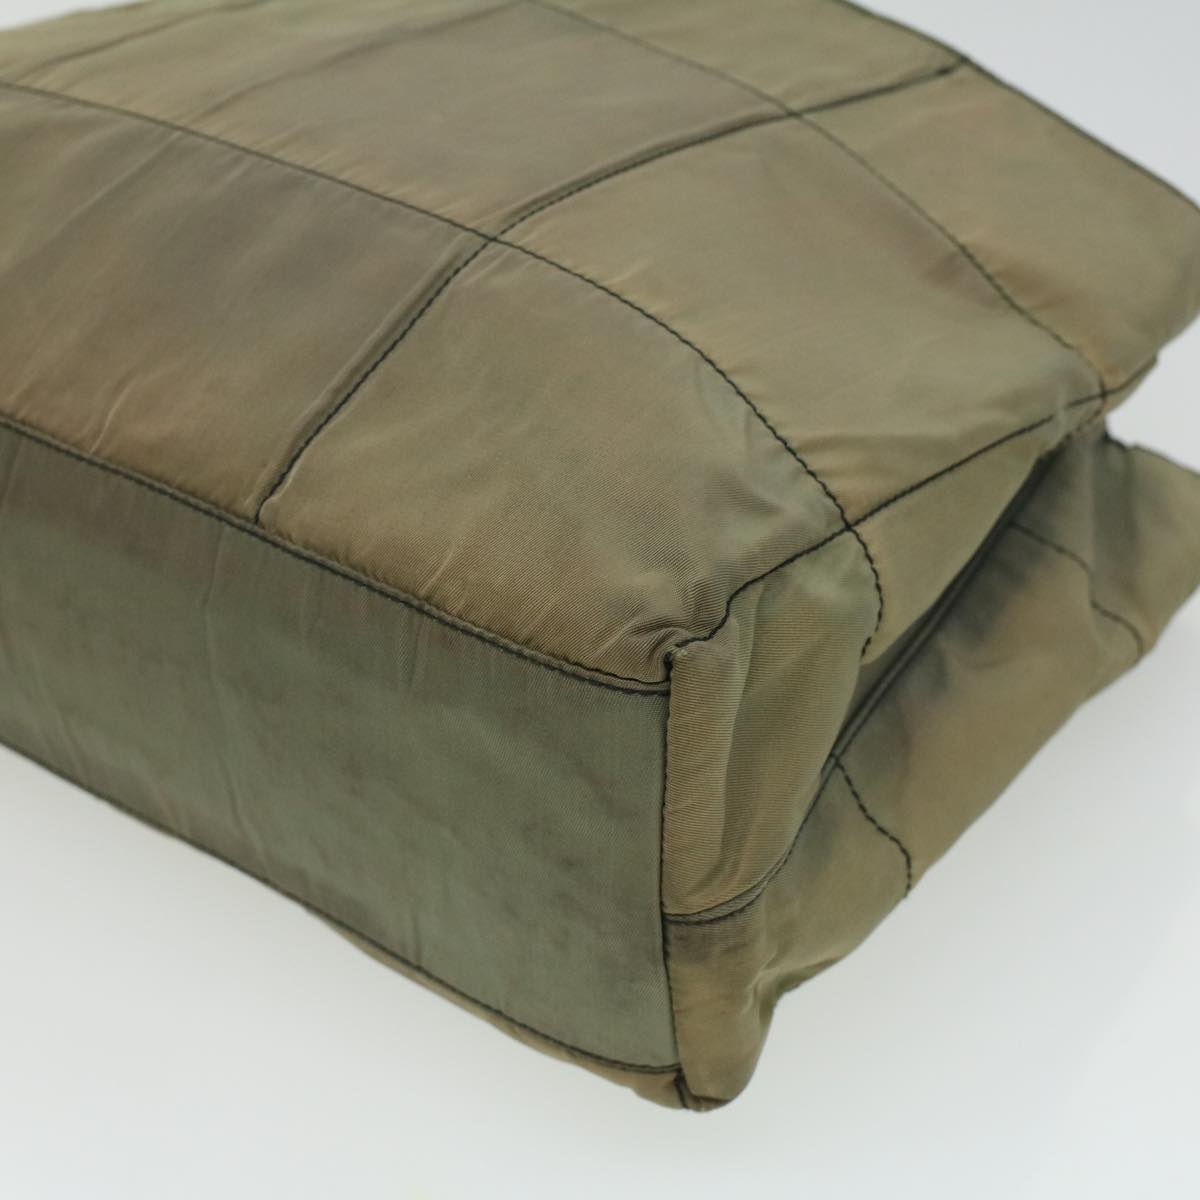 PRADA Shoulder Bag Nylon Gray Auth bs3043